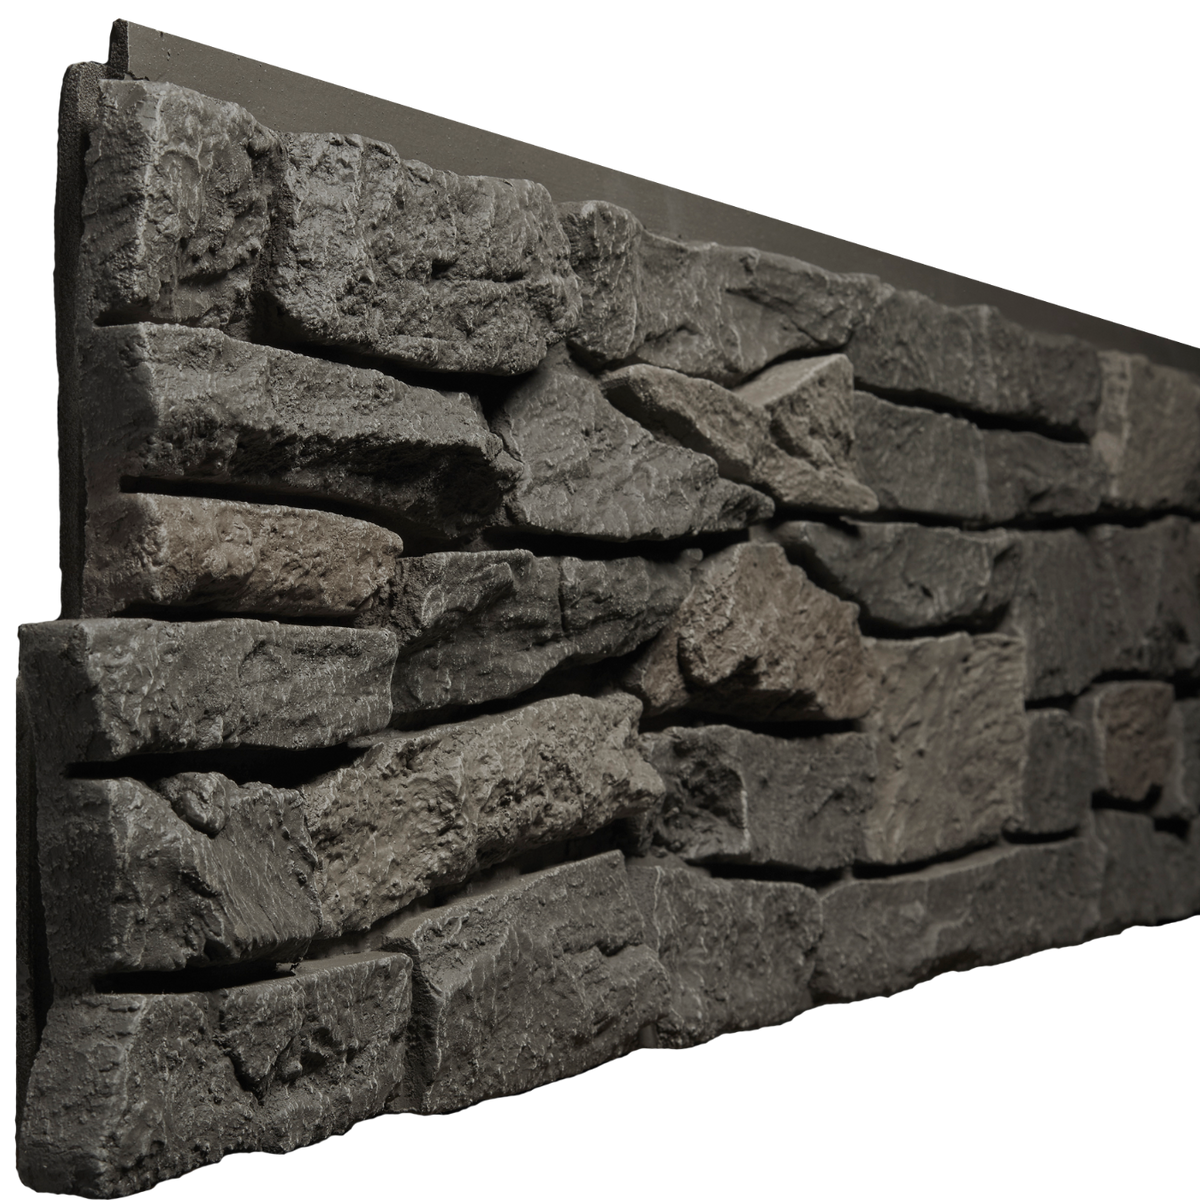 Faux Ridge Stone Panel - Dark Brown